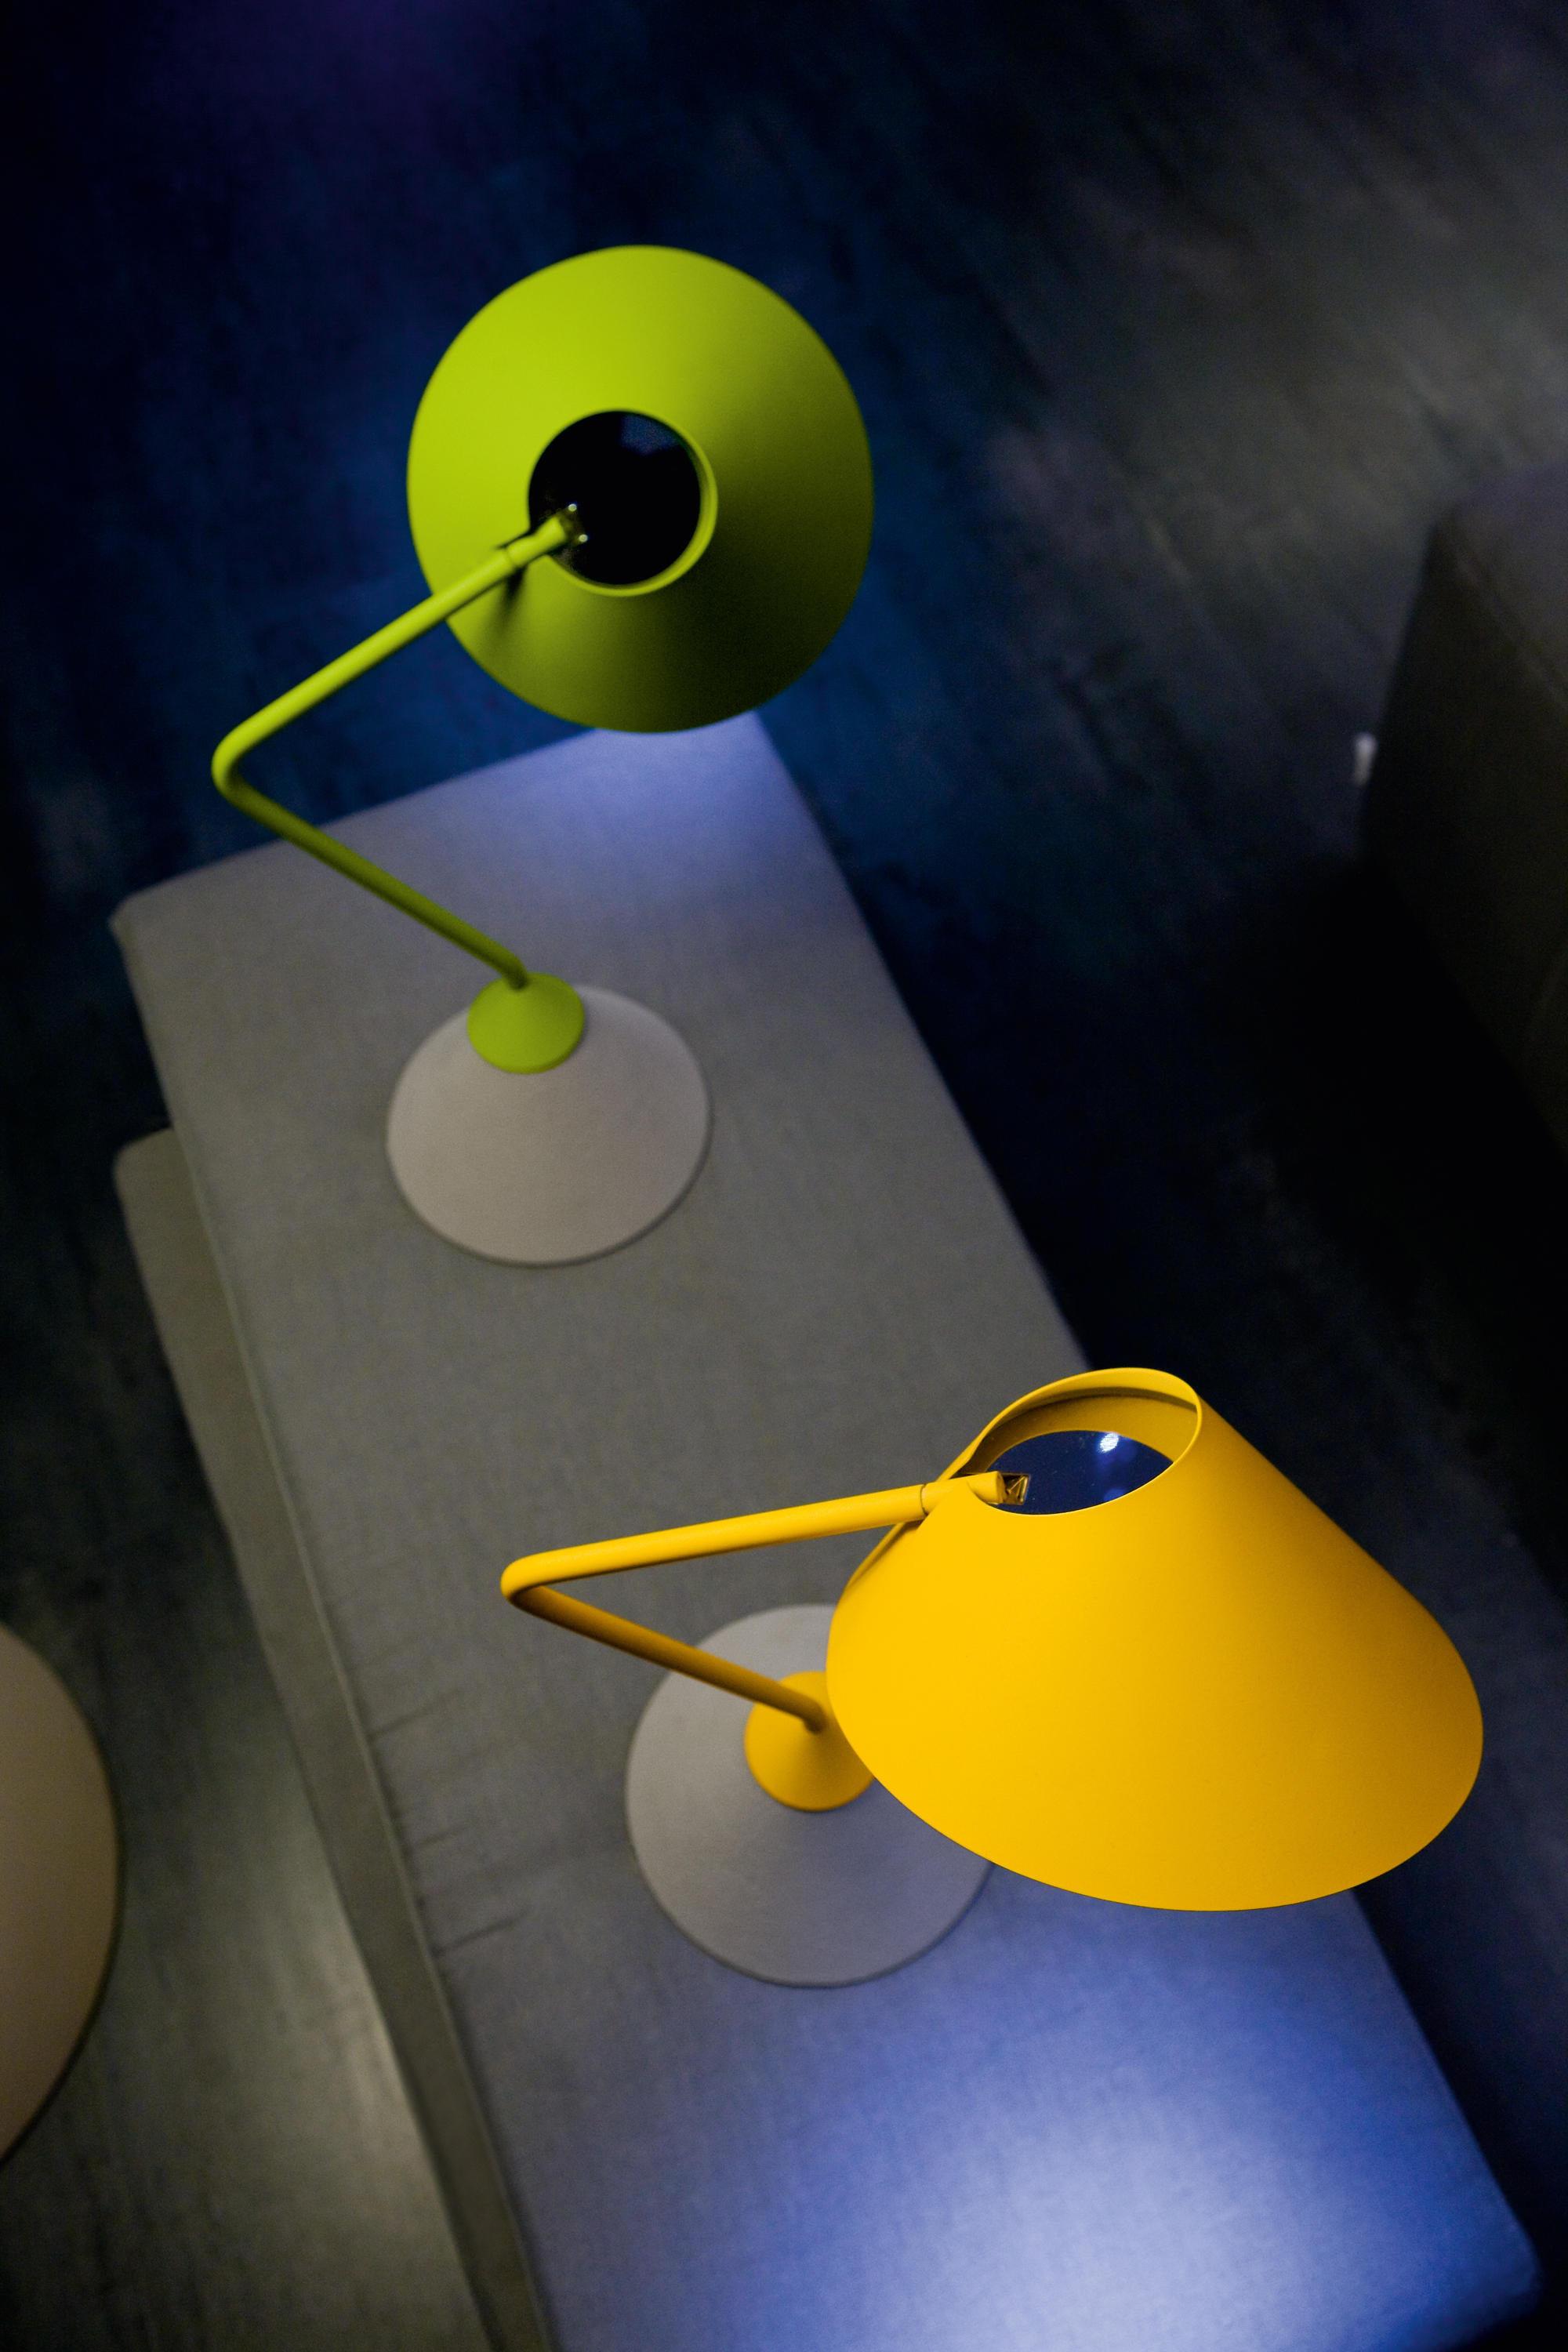 Flamingo Floor Lamp Designermobel Architonic